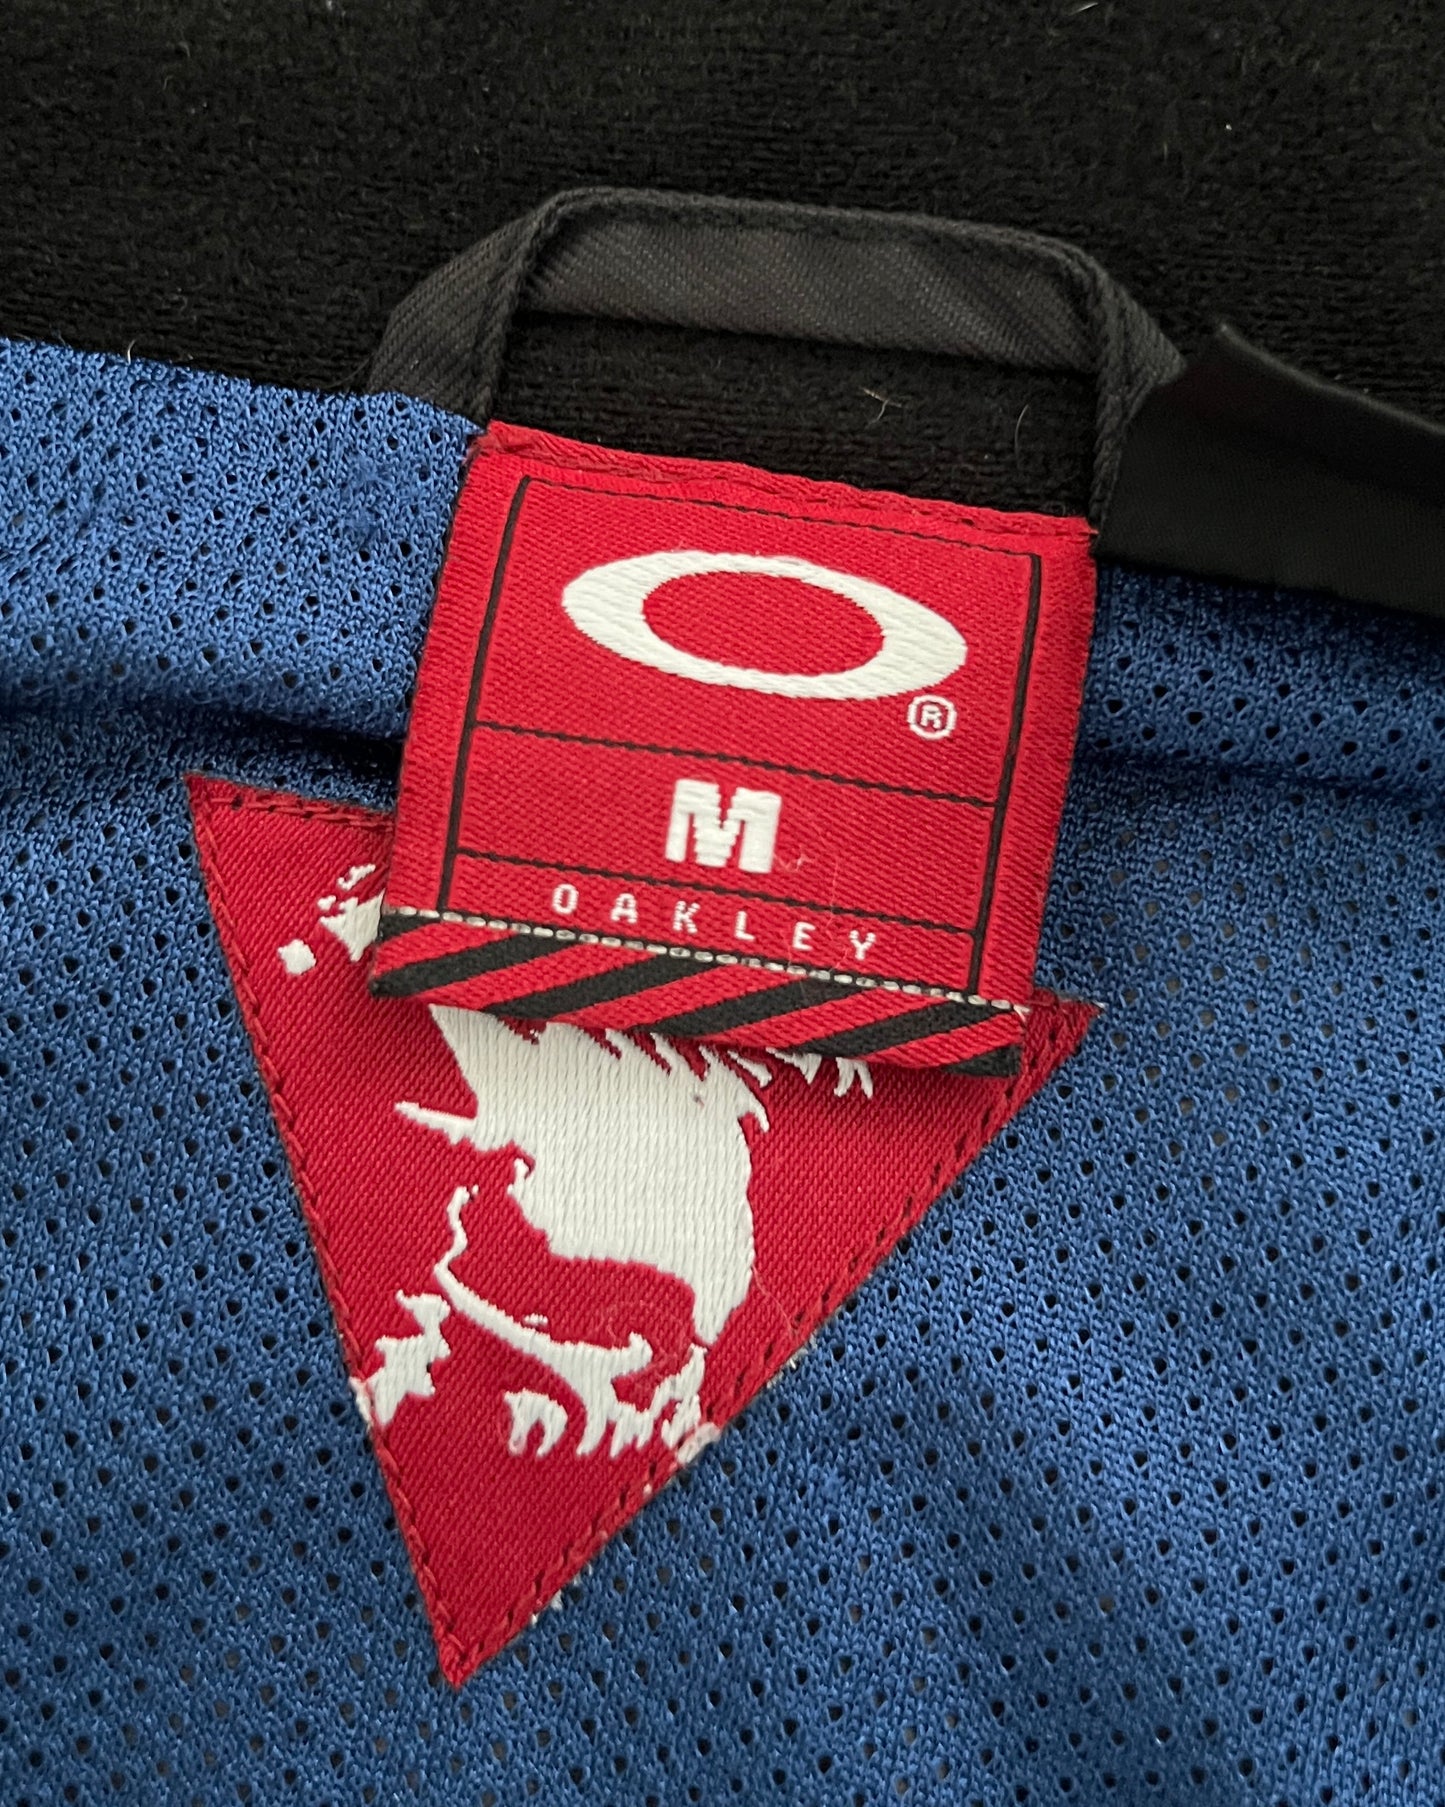 Oakley 00s Technical Ski Jacket - Size M